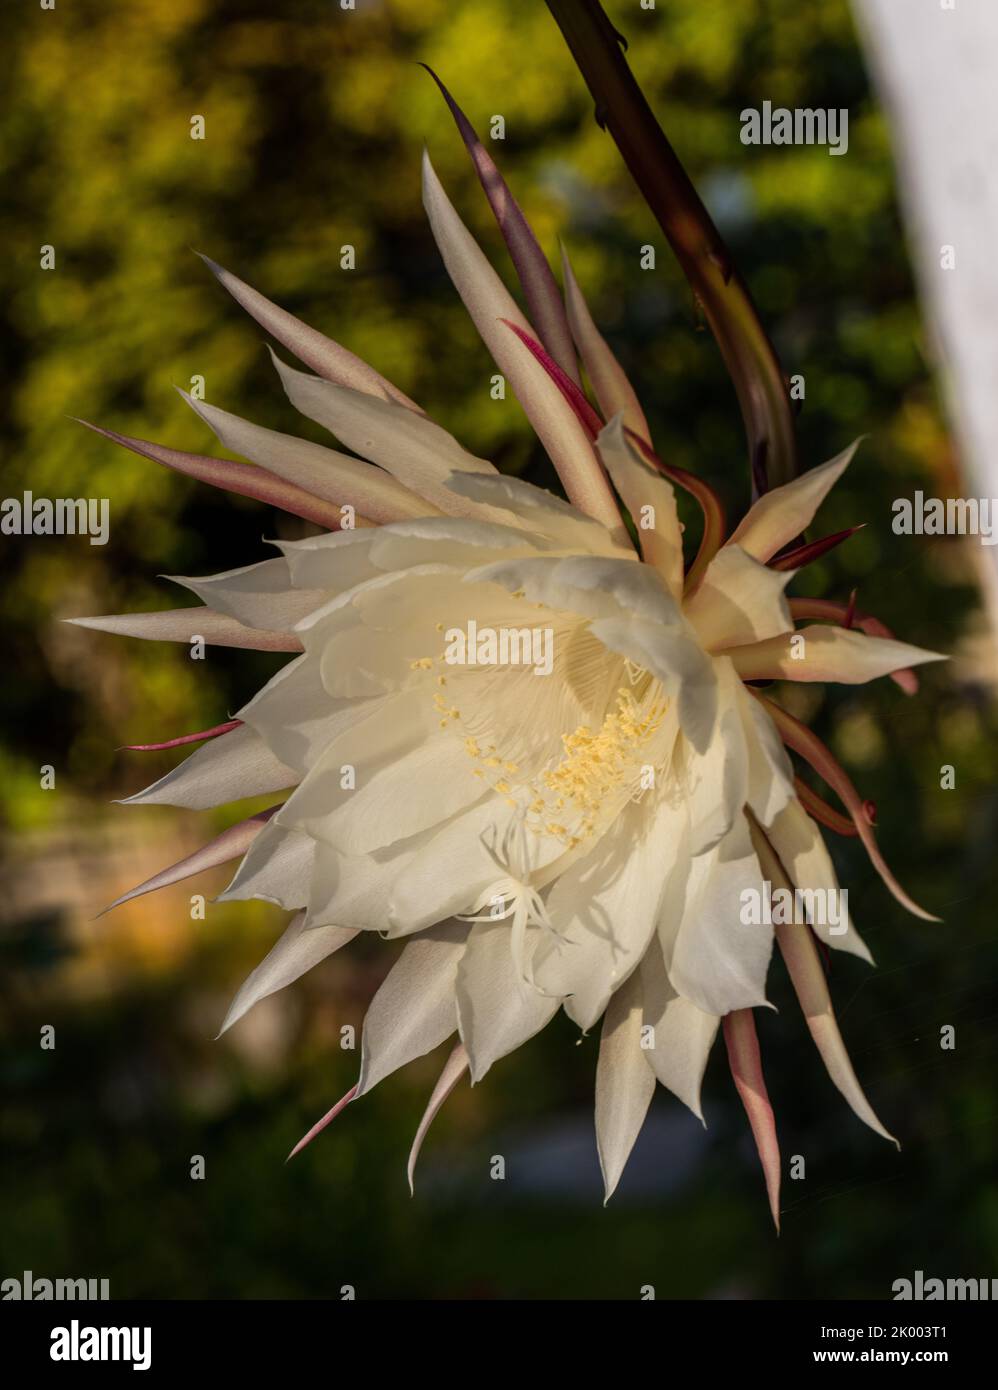 Cactus de tubería del holandés, Stor bladkaktus (Epiphyllum oxypetalum) Foto de stock